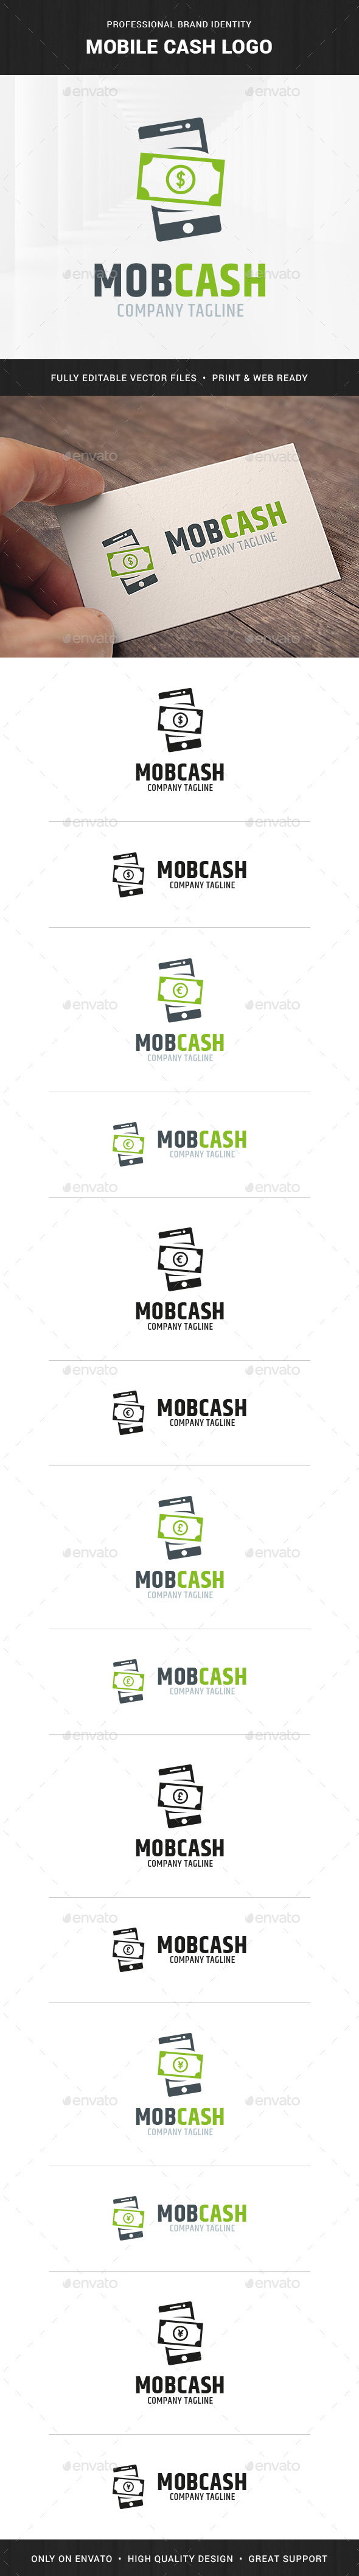 Mobile Cash Logo Template